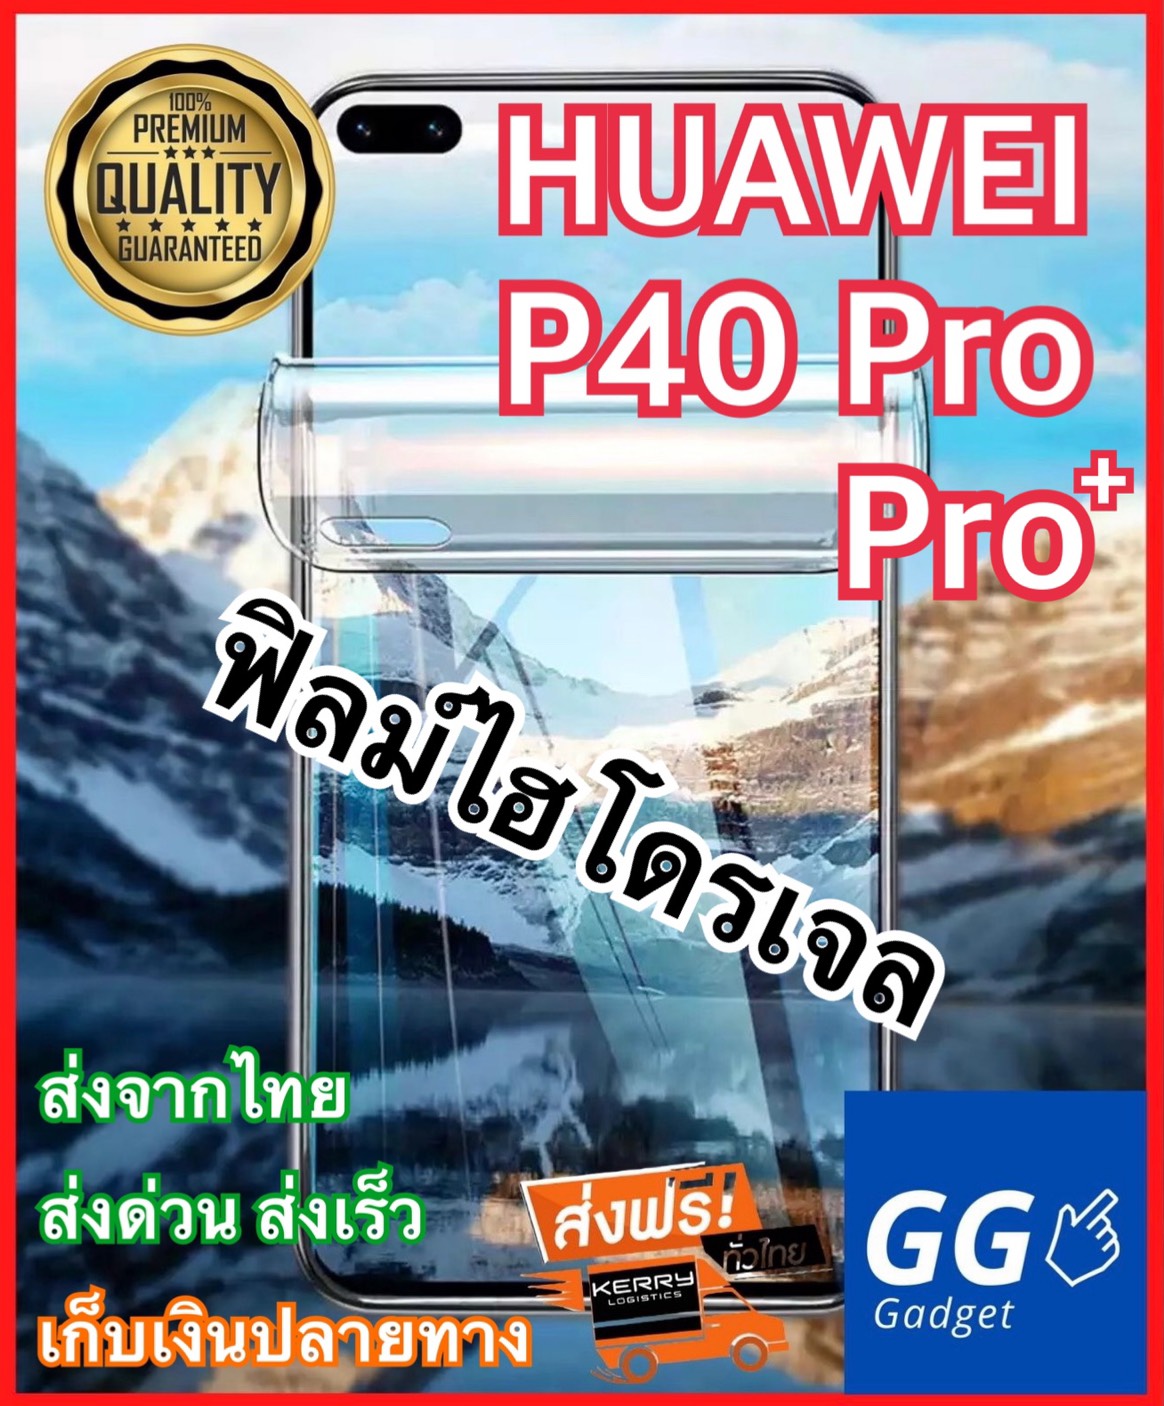 GGgadget ฟิล์มไฮโดรเจล เต็มจอ บางคลุมขอบโค้ง ฟิล์มโค้ง ใส กันรอย ลดแรงกระแทกจอ หัวเหว่ย P40 Pro Plus Full Cover Protection Transparent Curved Soft Hydrogel film For Huawei P40 Pro+